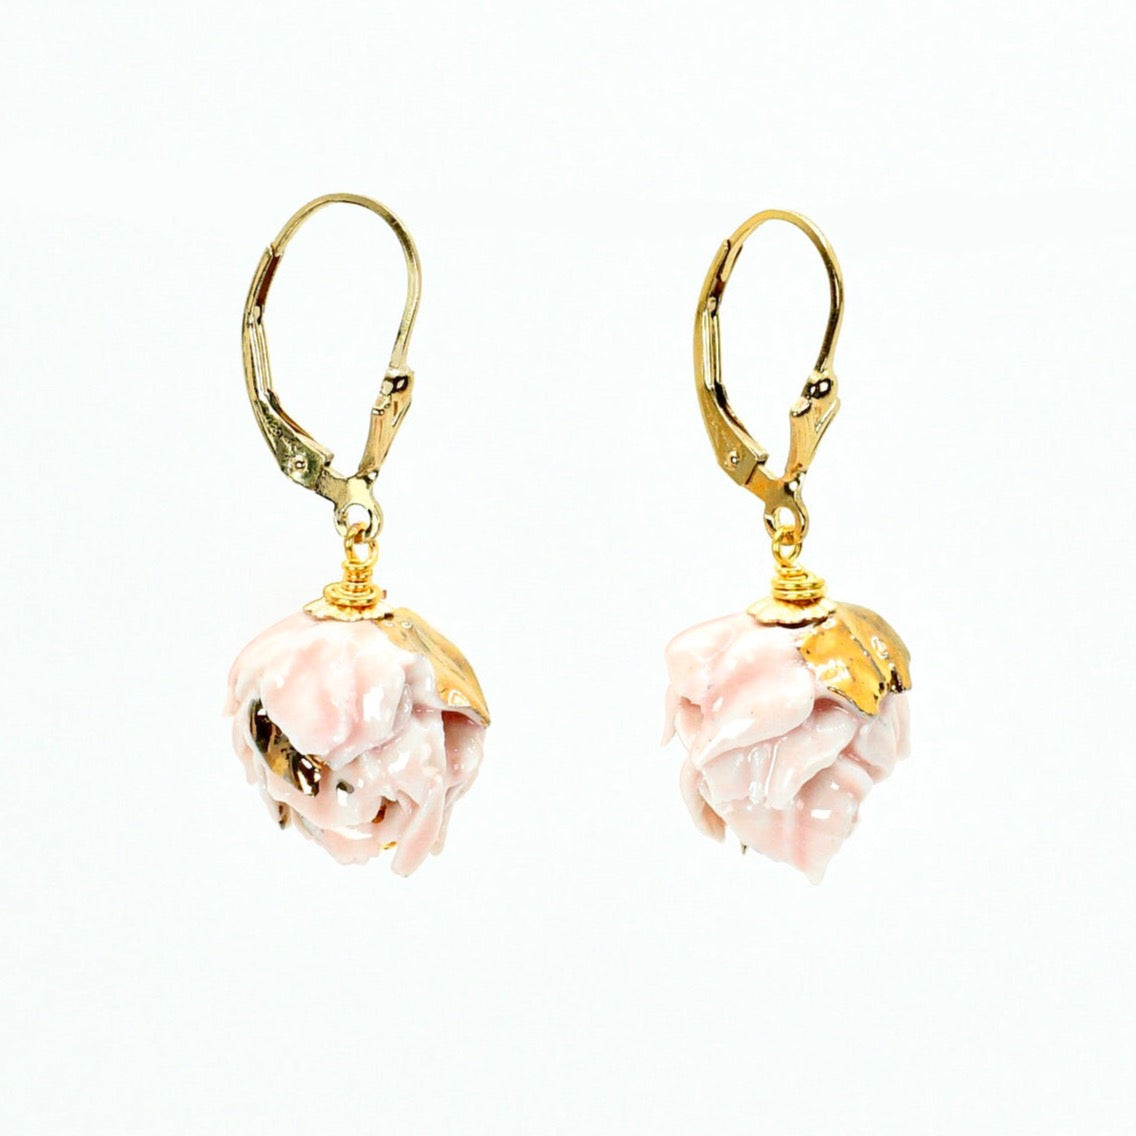 Pink porcelain artichoke earrings, leverbacks gold-filled,  embellished with 24Kgold